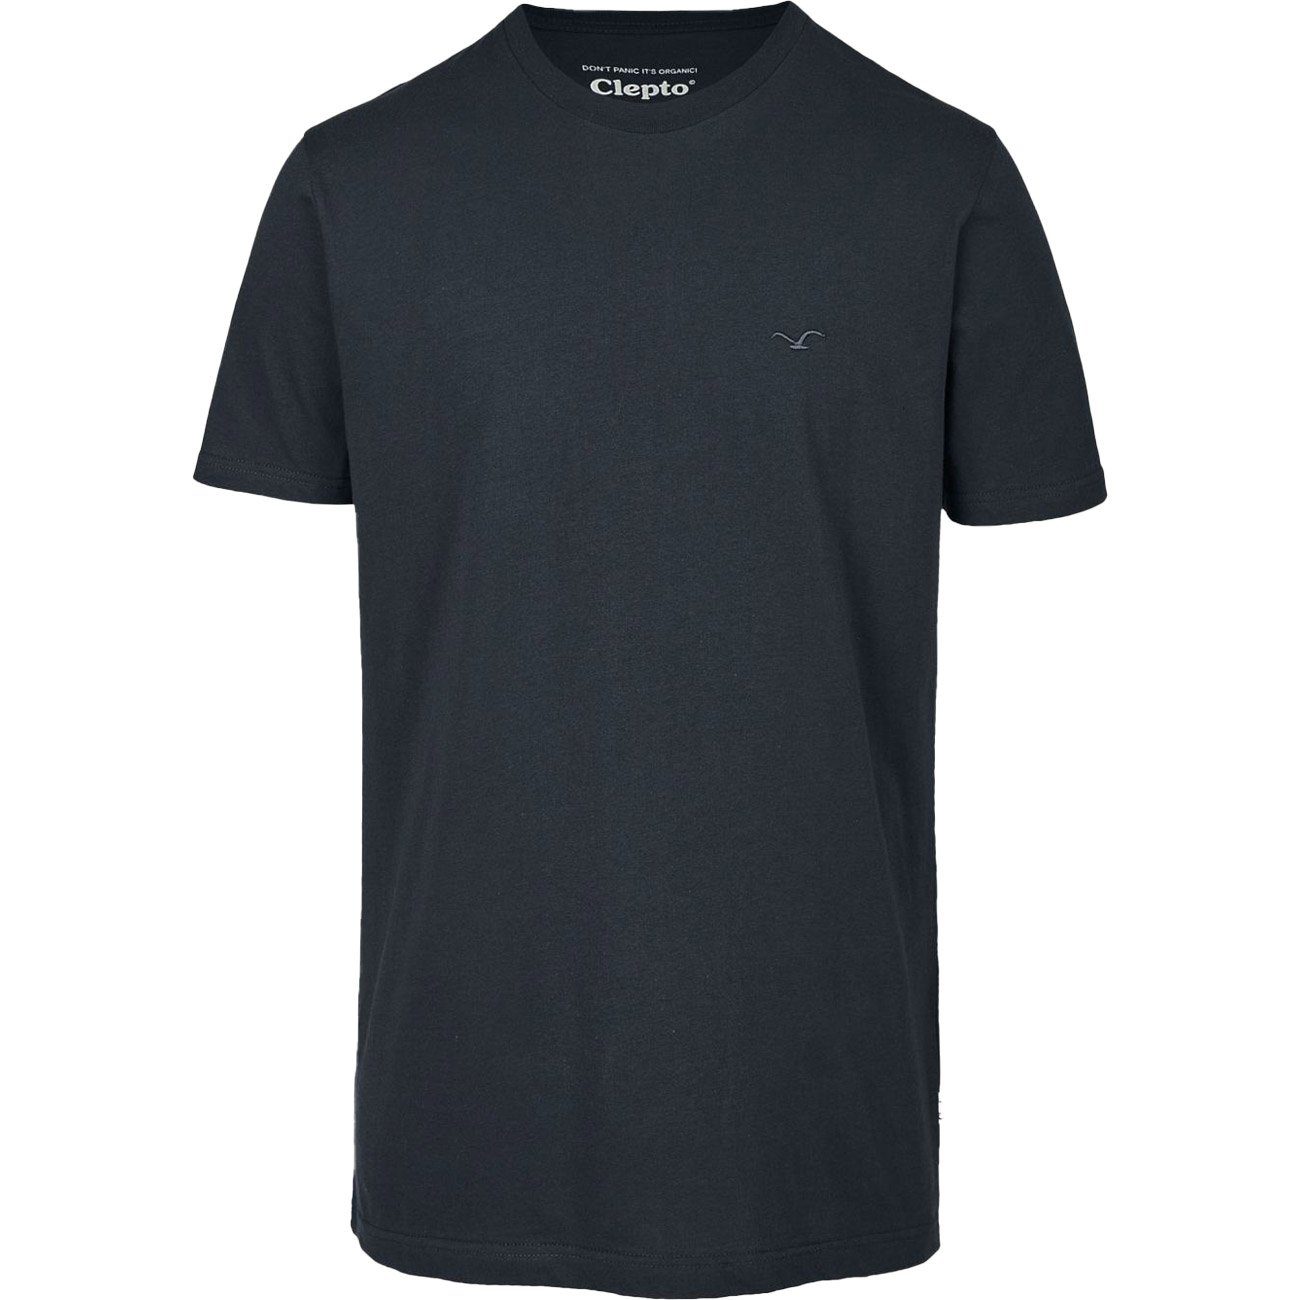 Cleptomanicx T-Shirt Ligull Regular mirage blue